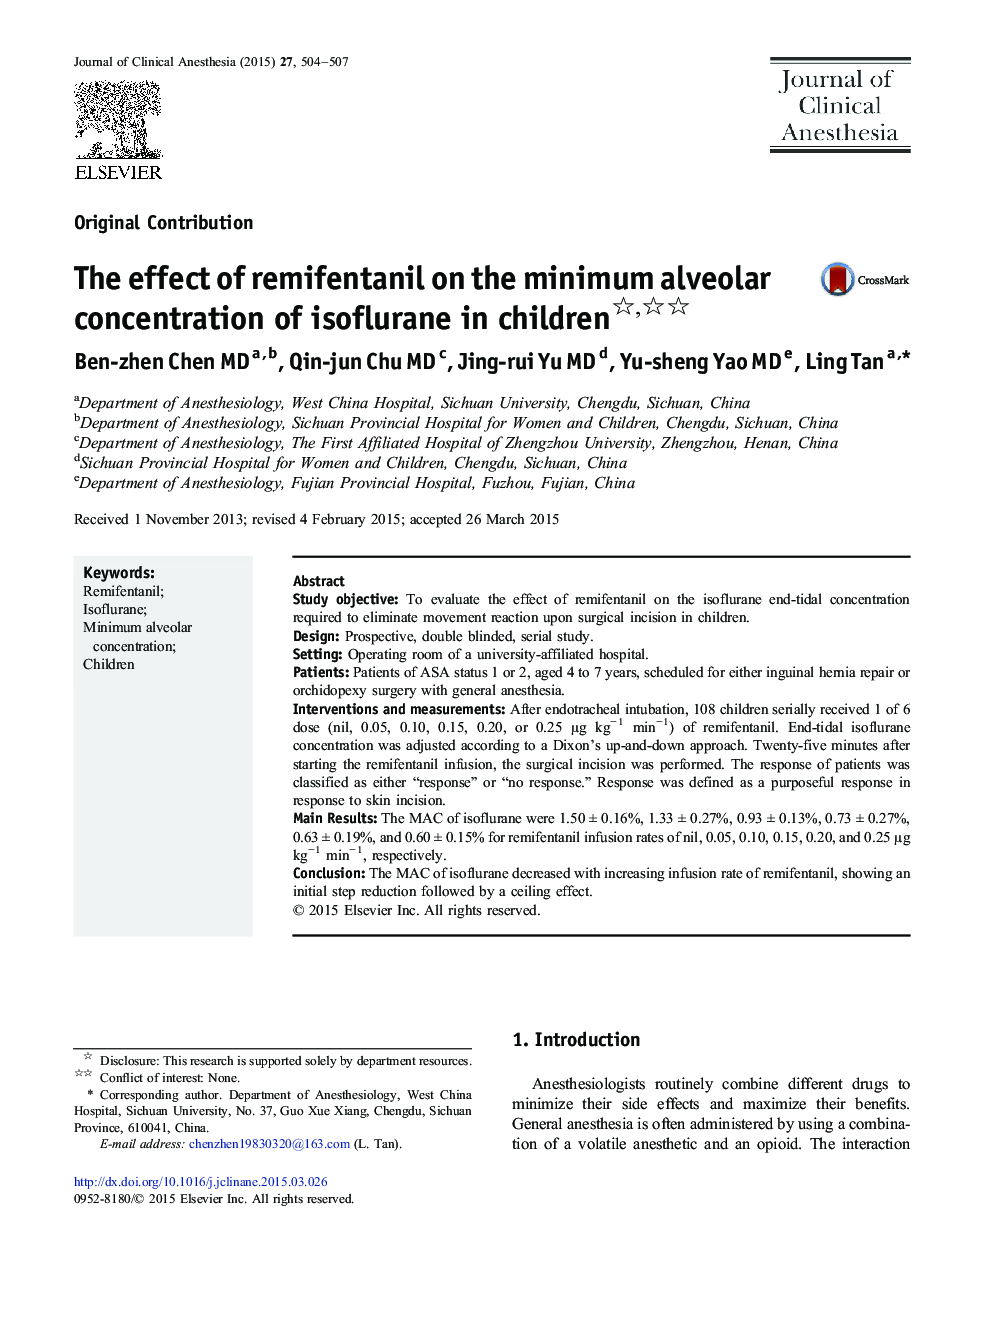 The effect of remifentanil on the minimum alveolar concentration of isoflurane in children 